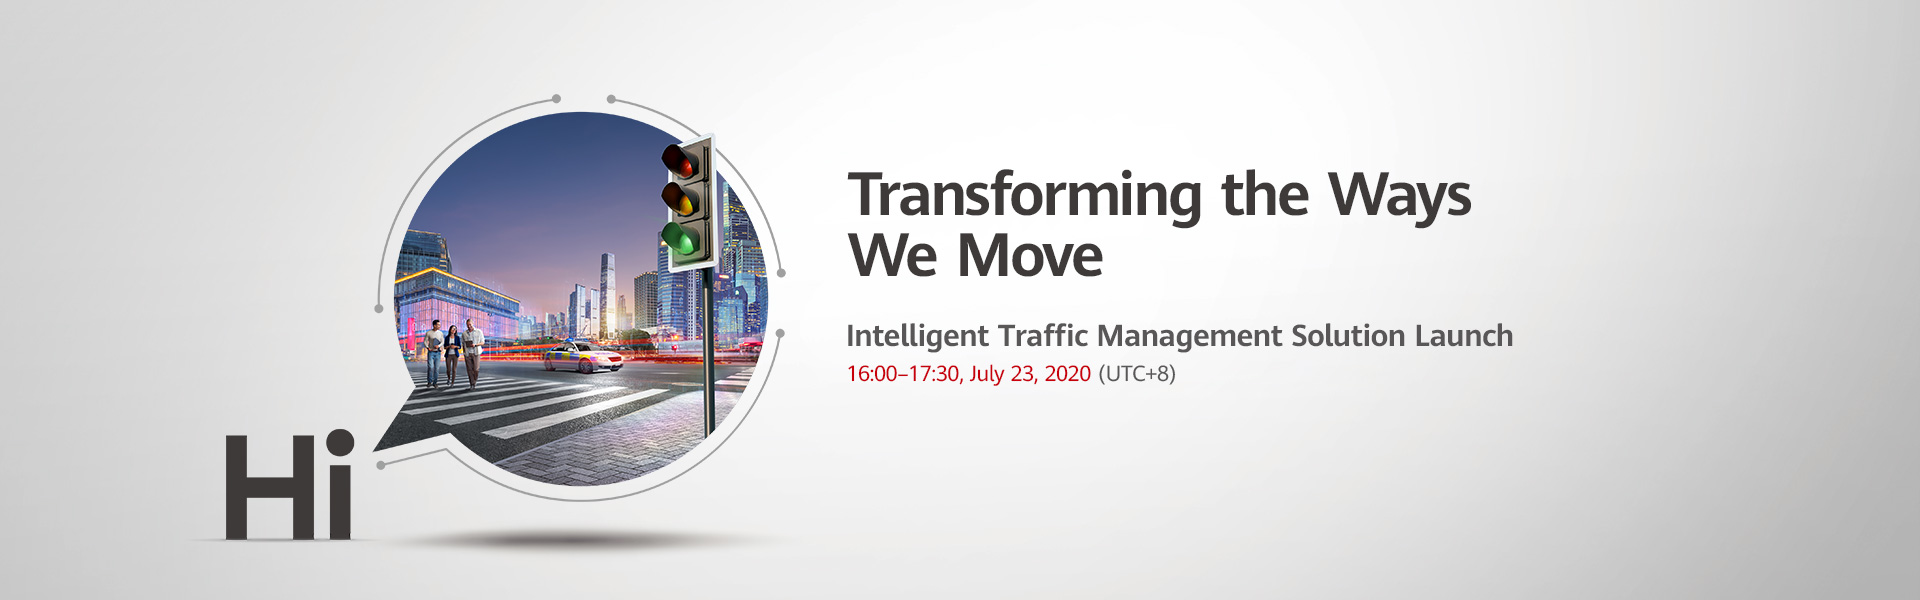 Intelligent Traffic Management Solution Launch 2020